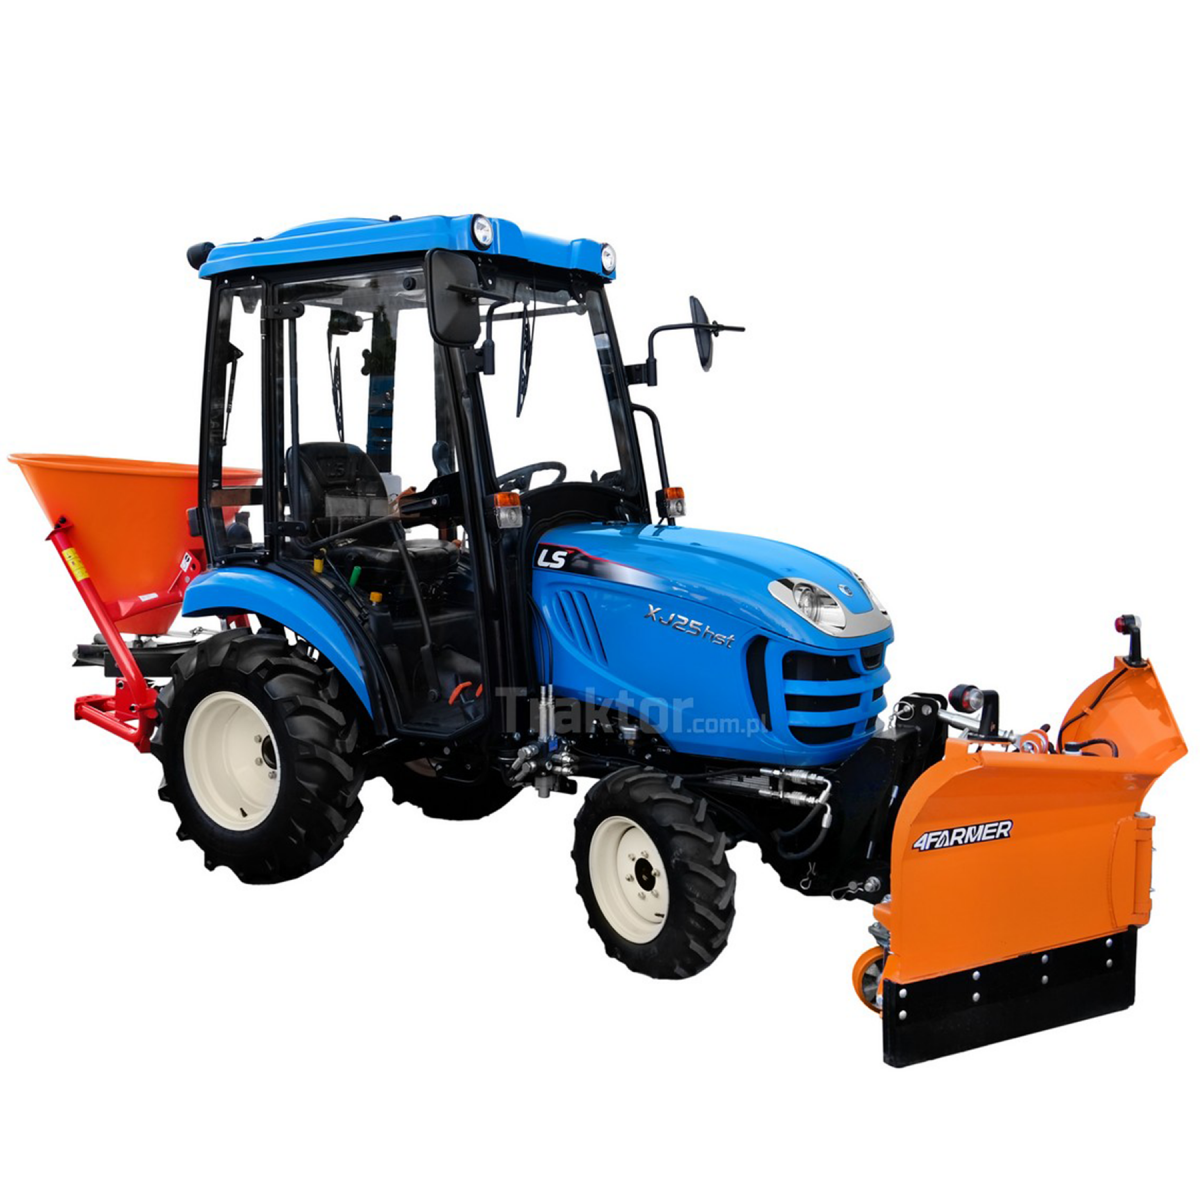 LS-Traktor XJ25 HST 4x4 - 24,4 PS / KABINE + Vario-Pfeil-Schneepflug 150 cm, hydraulischer 4FARMER + 200L Dexwal-Streuer